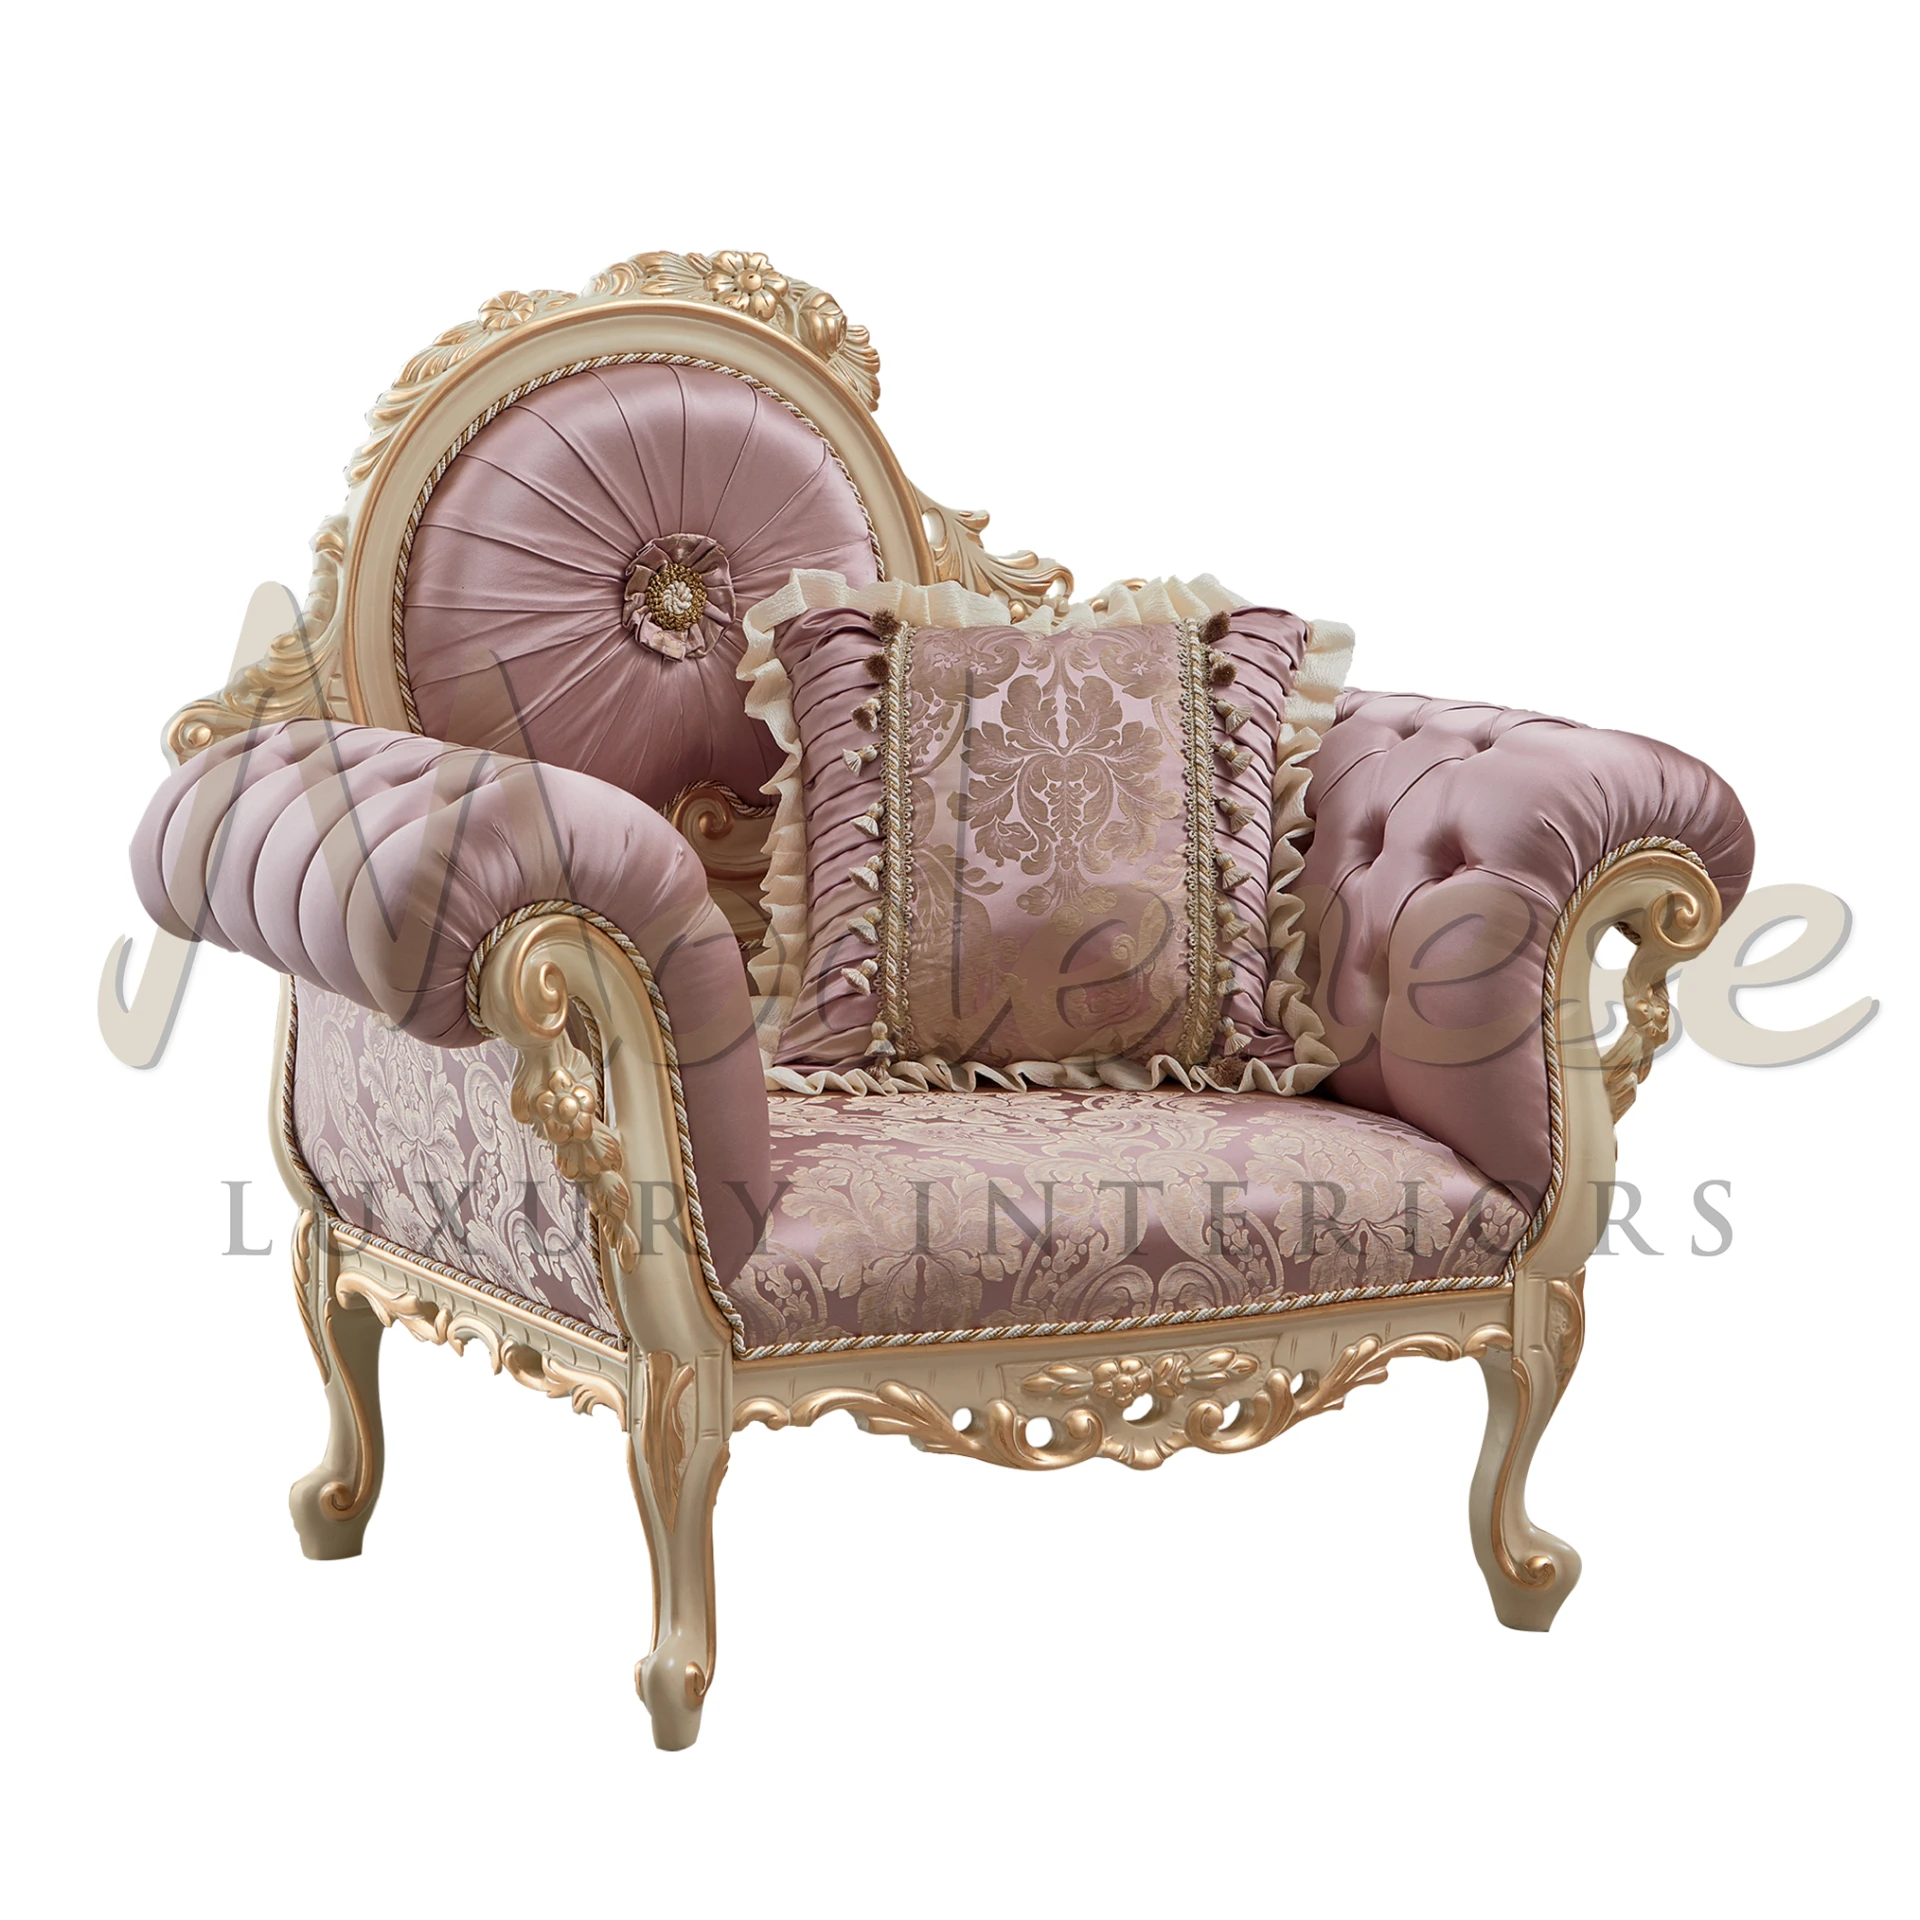 Luxurious Elegant Victorian Upholstered Armchair with ornate design, velvet upholstery, and Italian craftsmanship.
